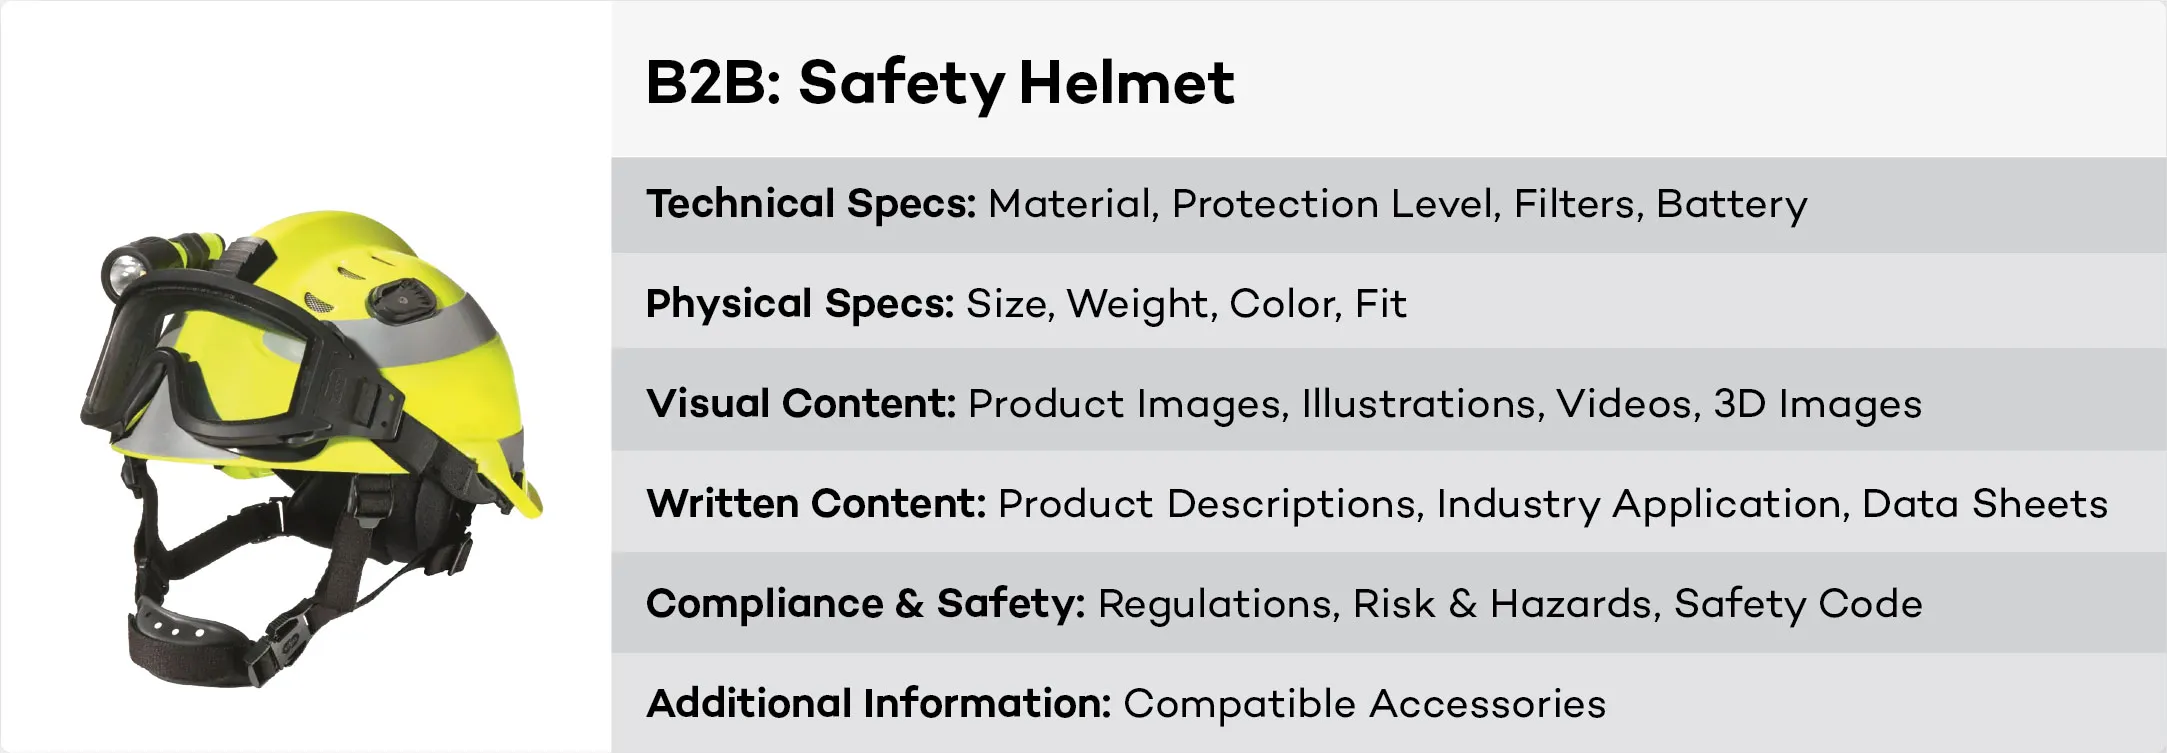 B2B safety helmet